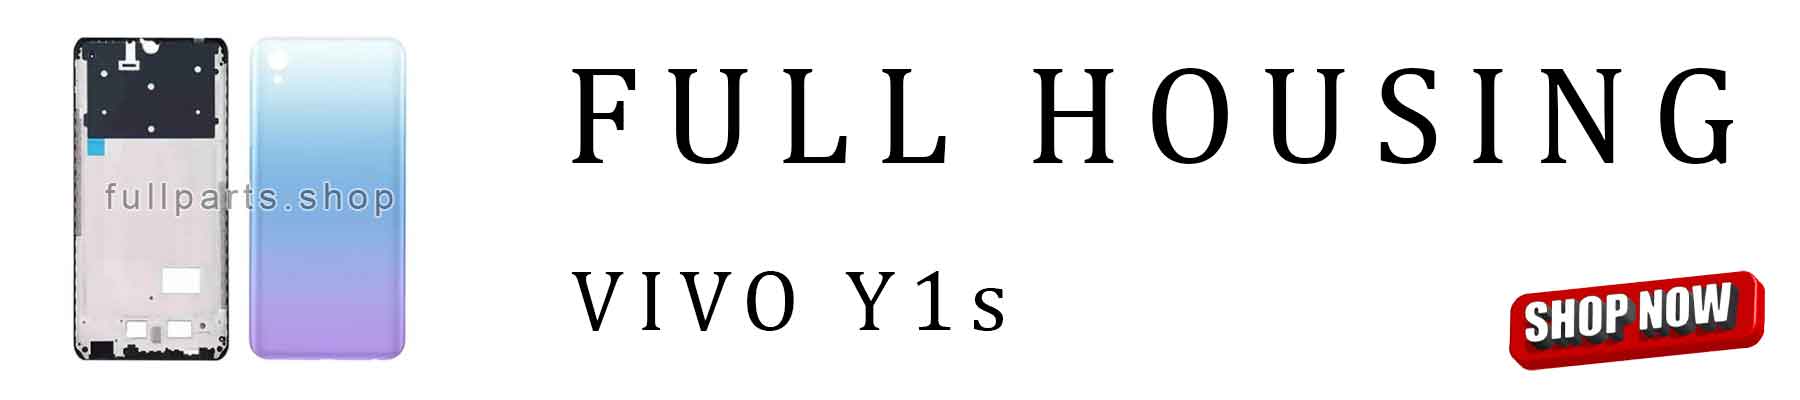 Y1S-FULL-HOUSING